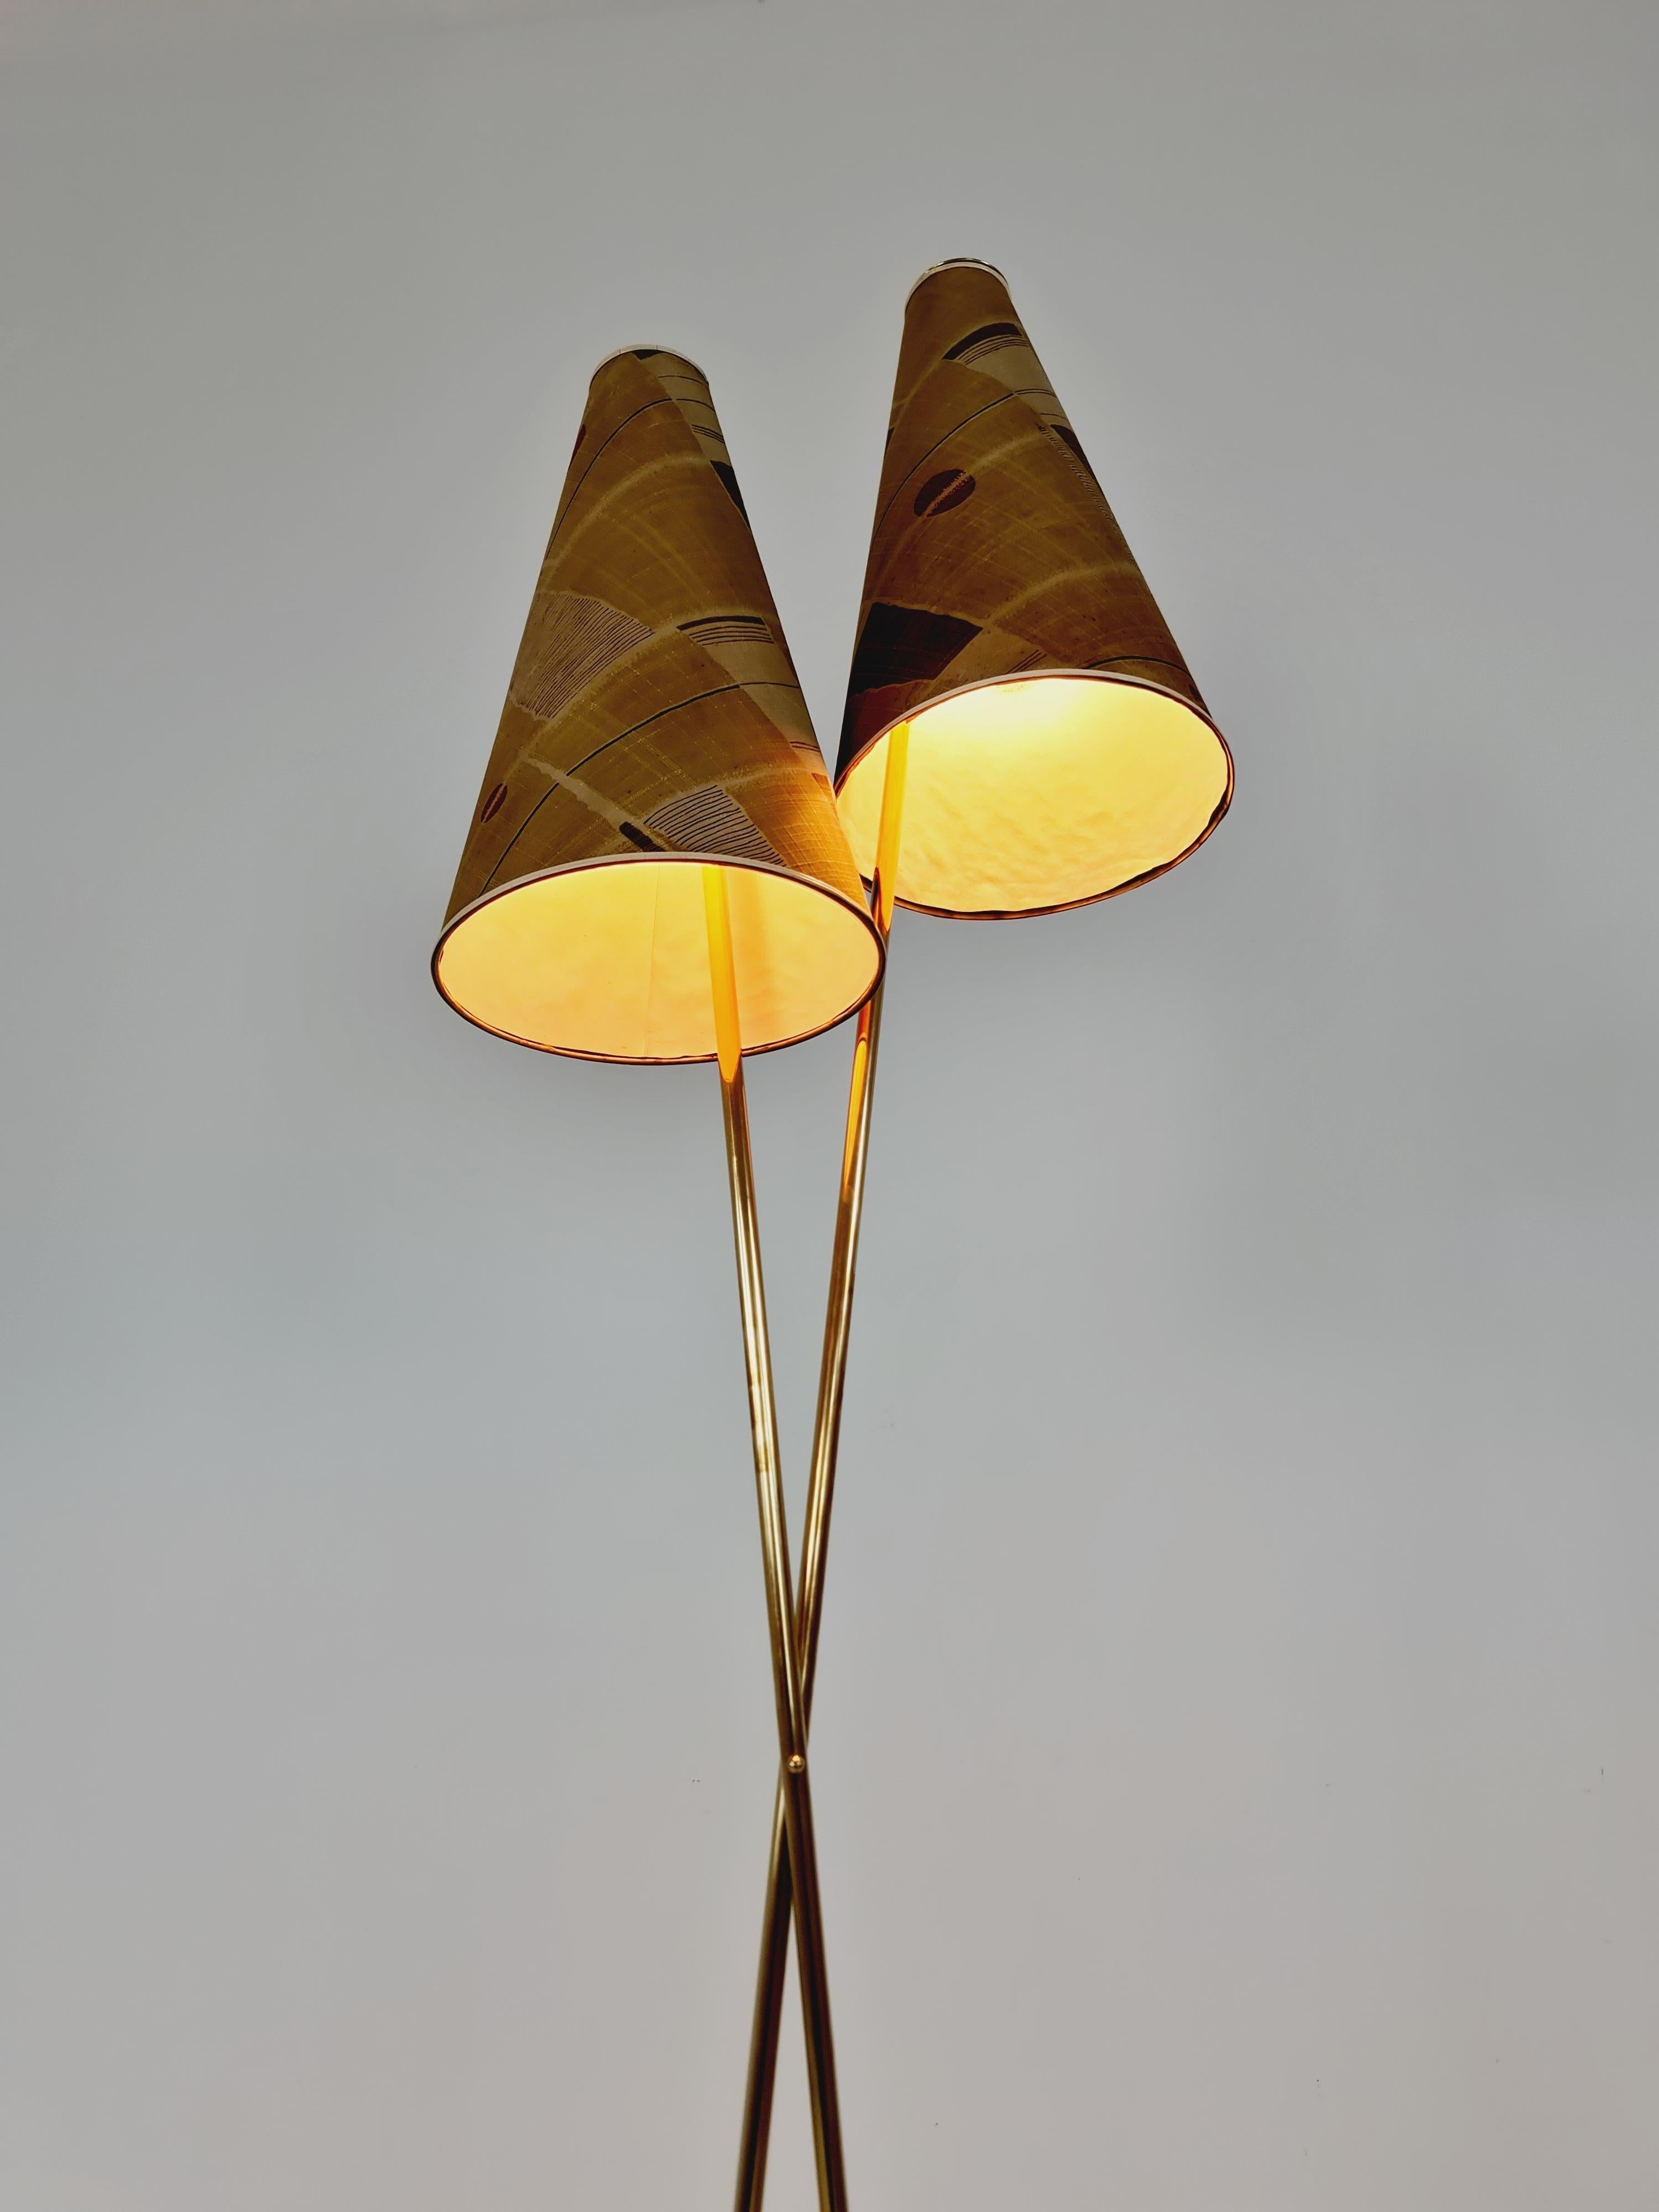 EXTREME RARE brass 1950s vintage floor lamp / bag lamp mcm For Sale 3